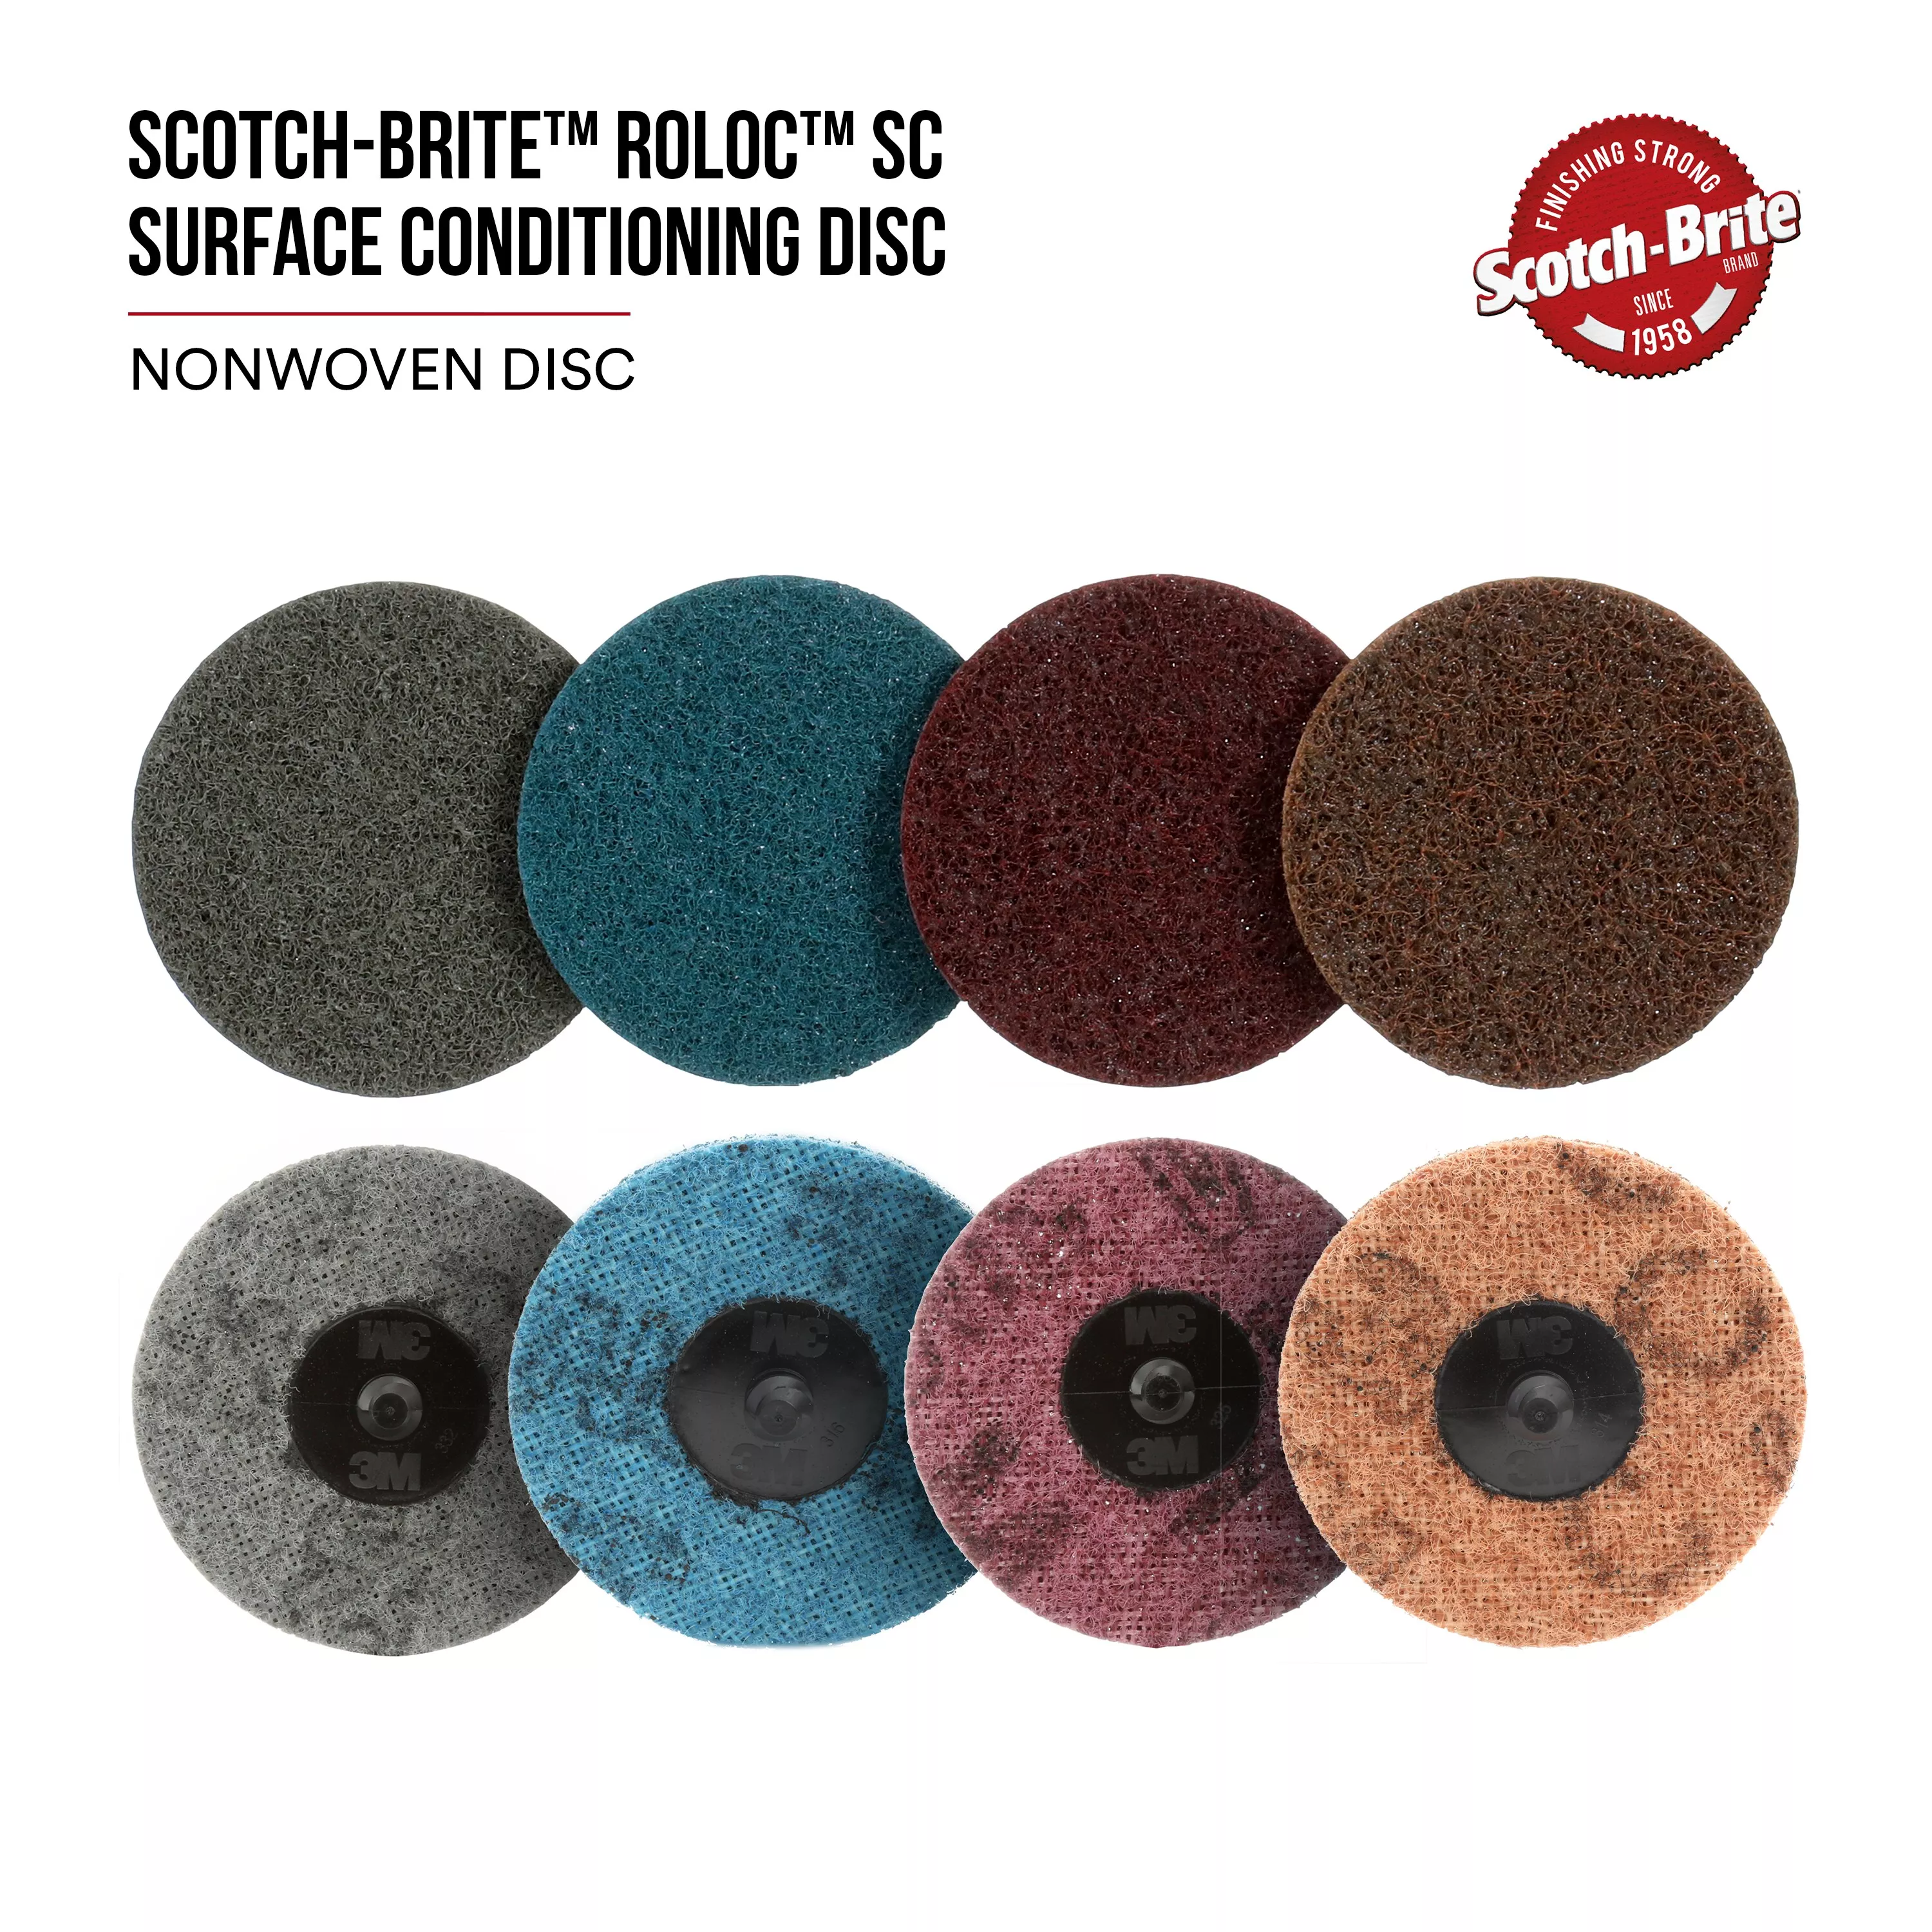 SKU 7010309343 | Scotch-Brite™ Roloc™ Surface Conditioning Disc